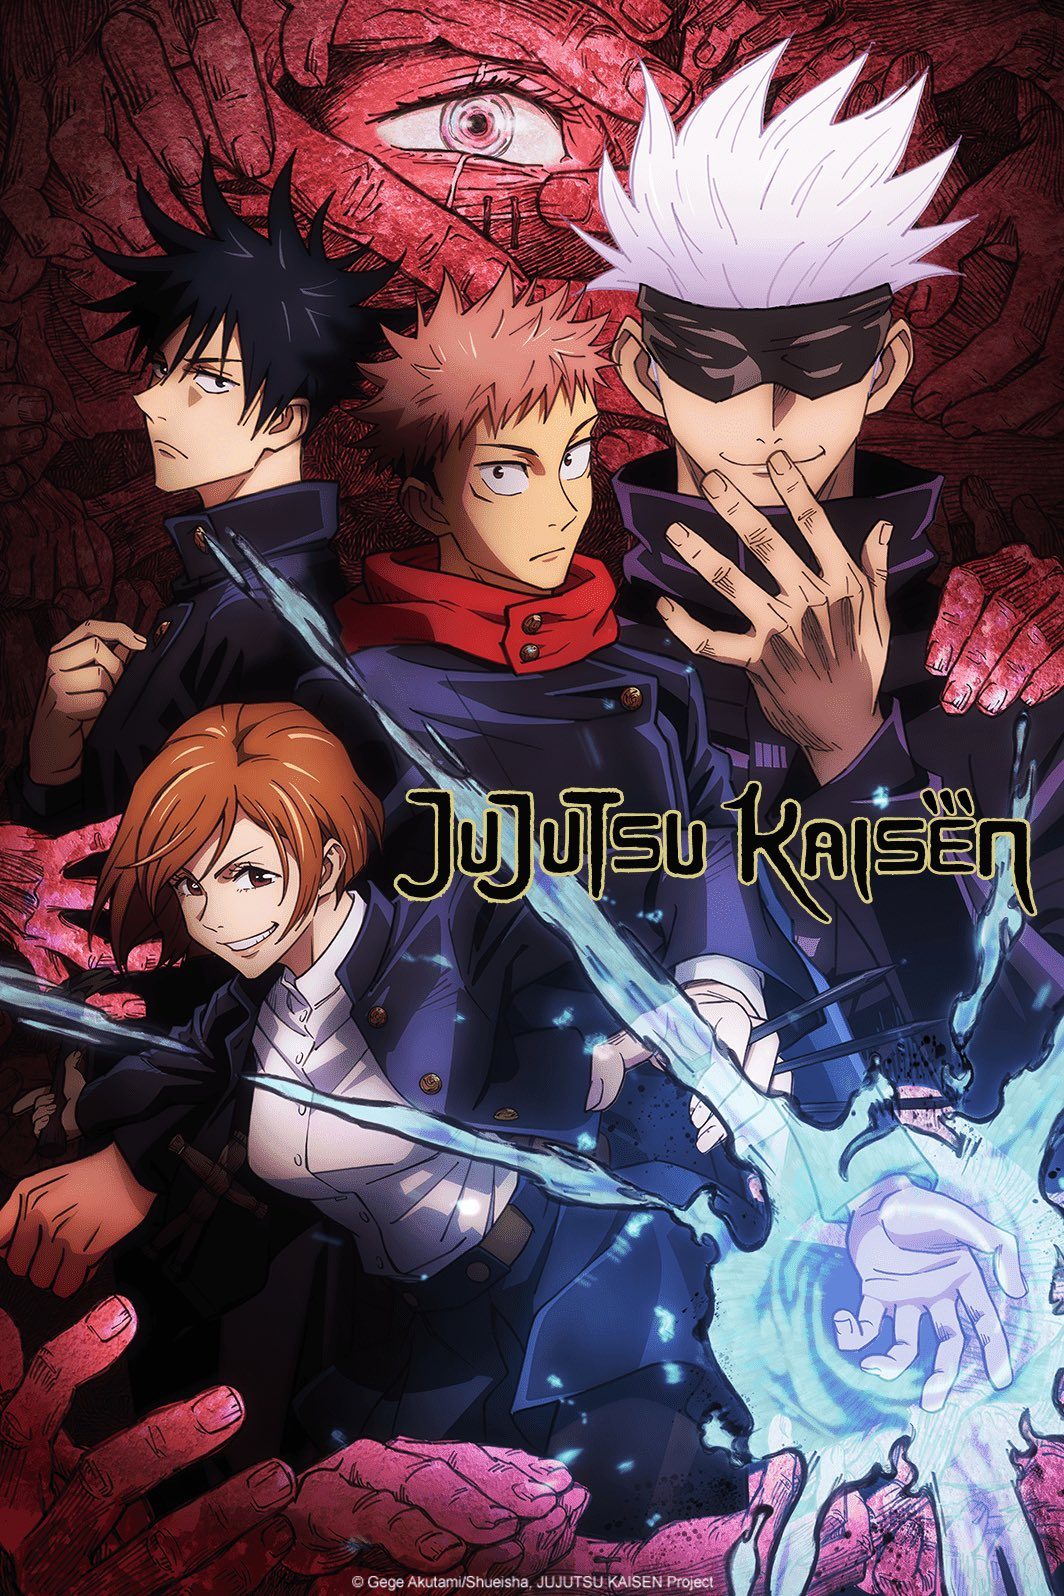 Announcement regarding Jujutsu Kaisen anime